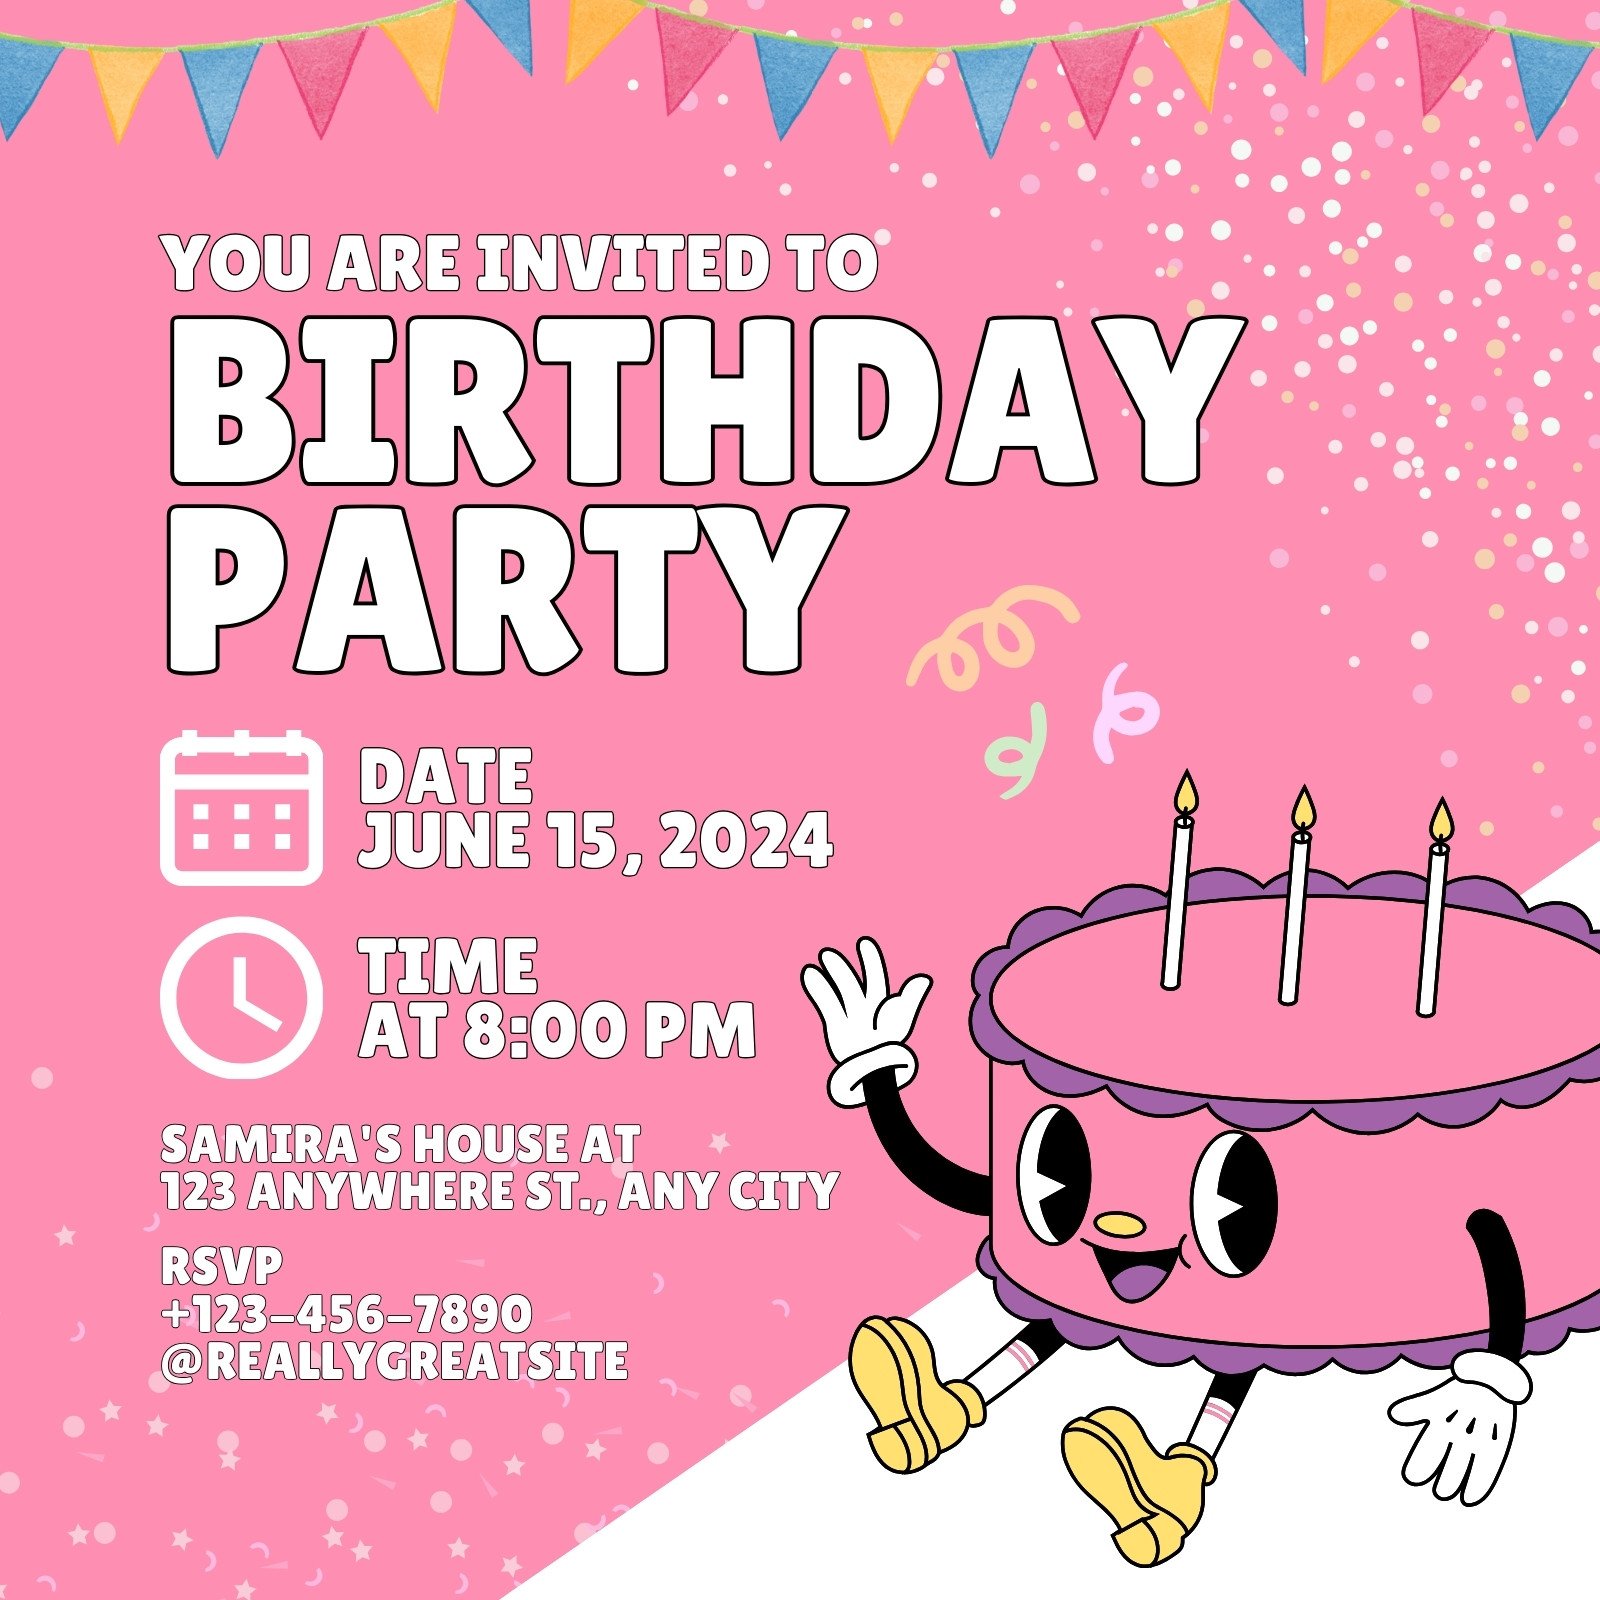 Pink and White Illustrative Birthday Invitation Instagram Post